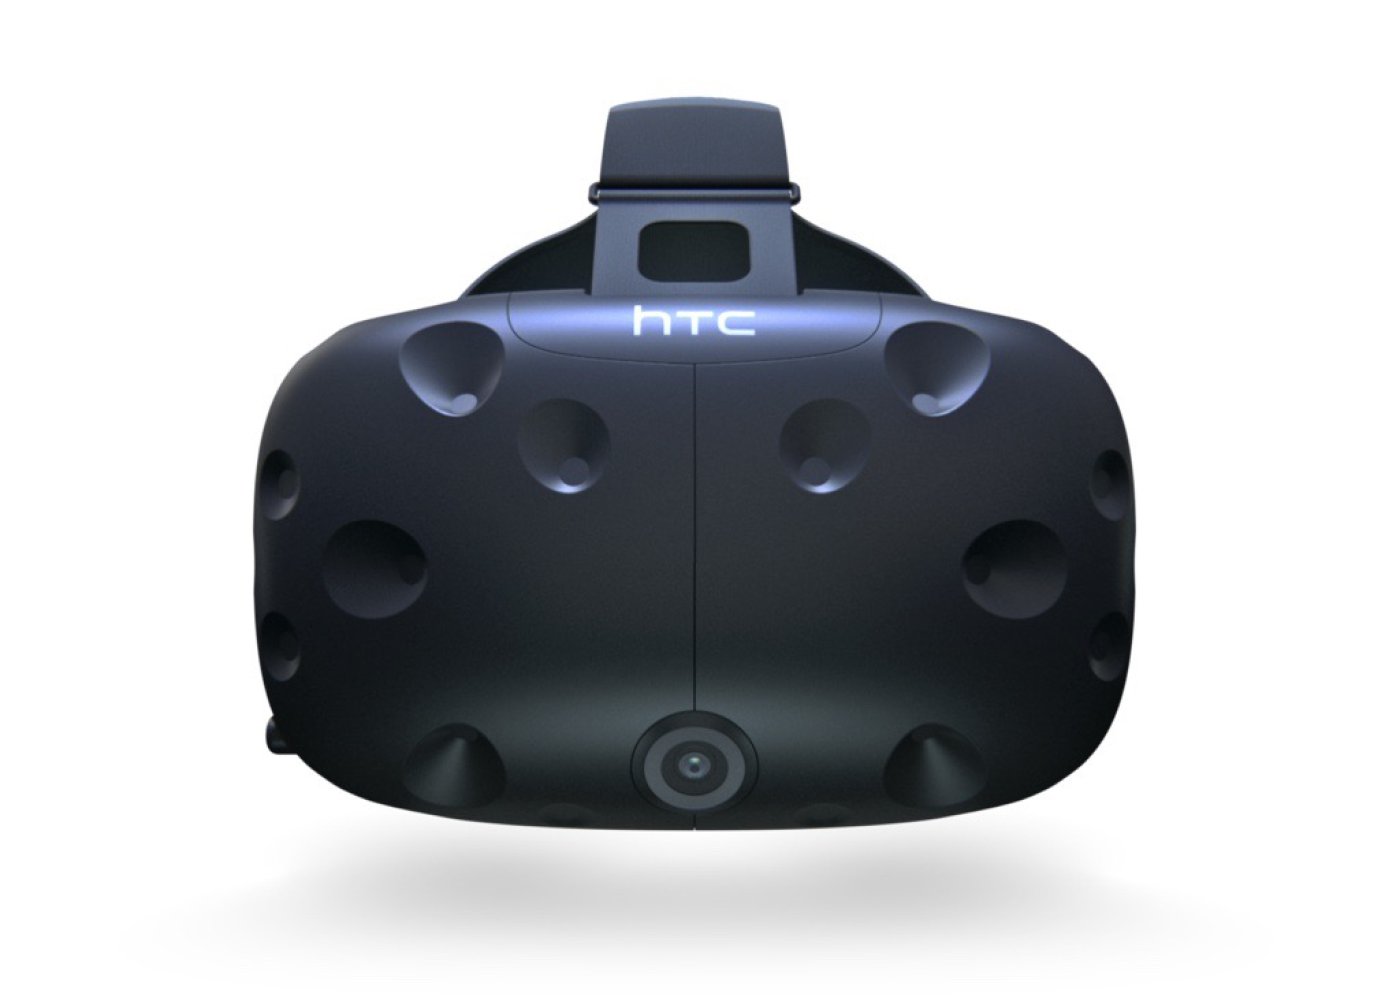 HTC starts shipping its Vive virtual reality headset